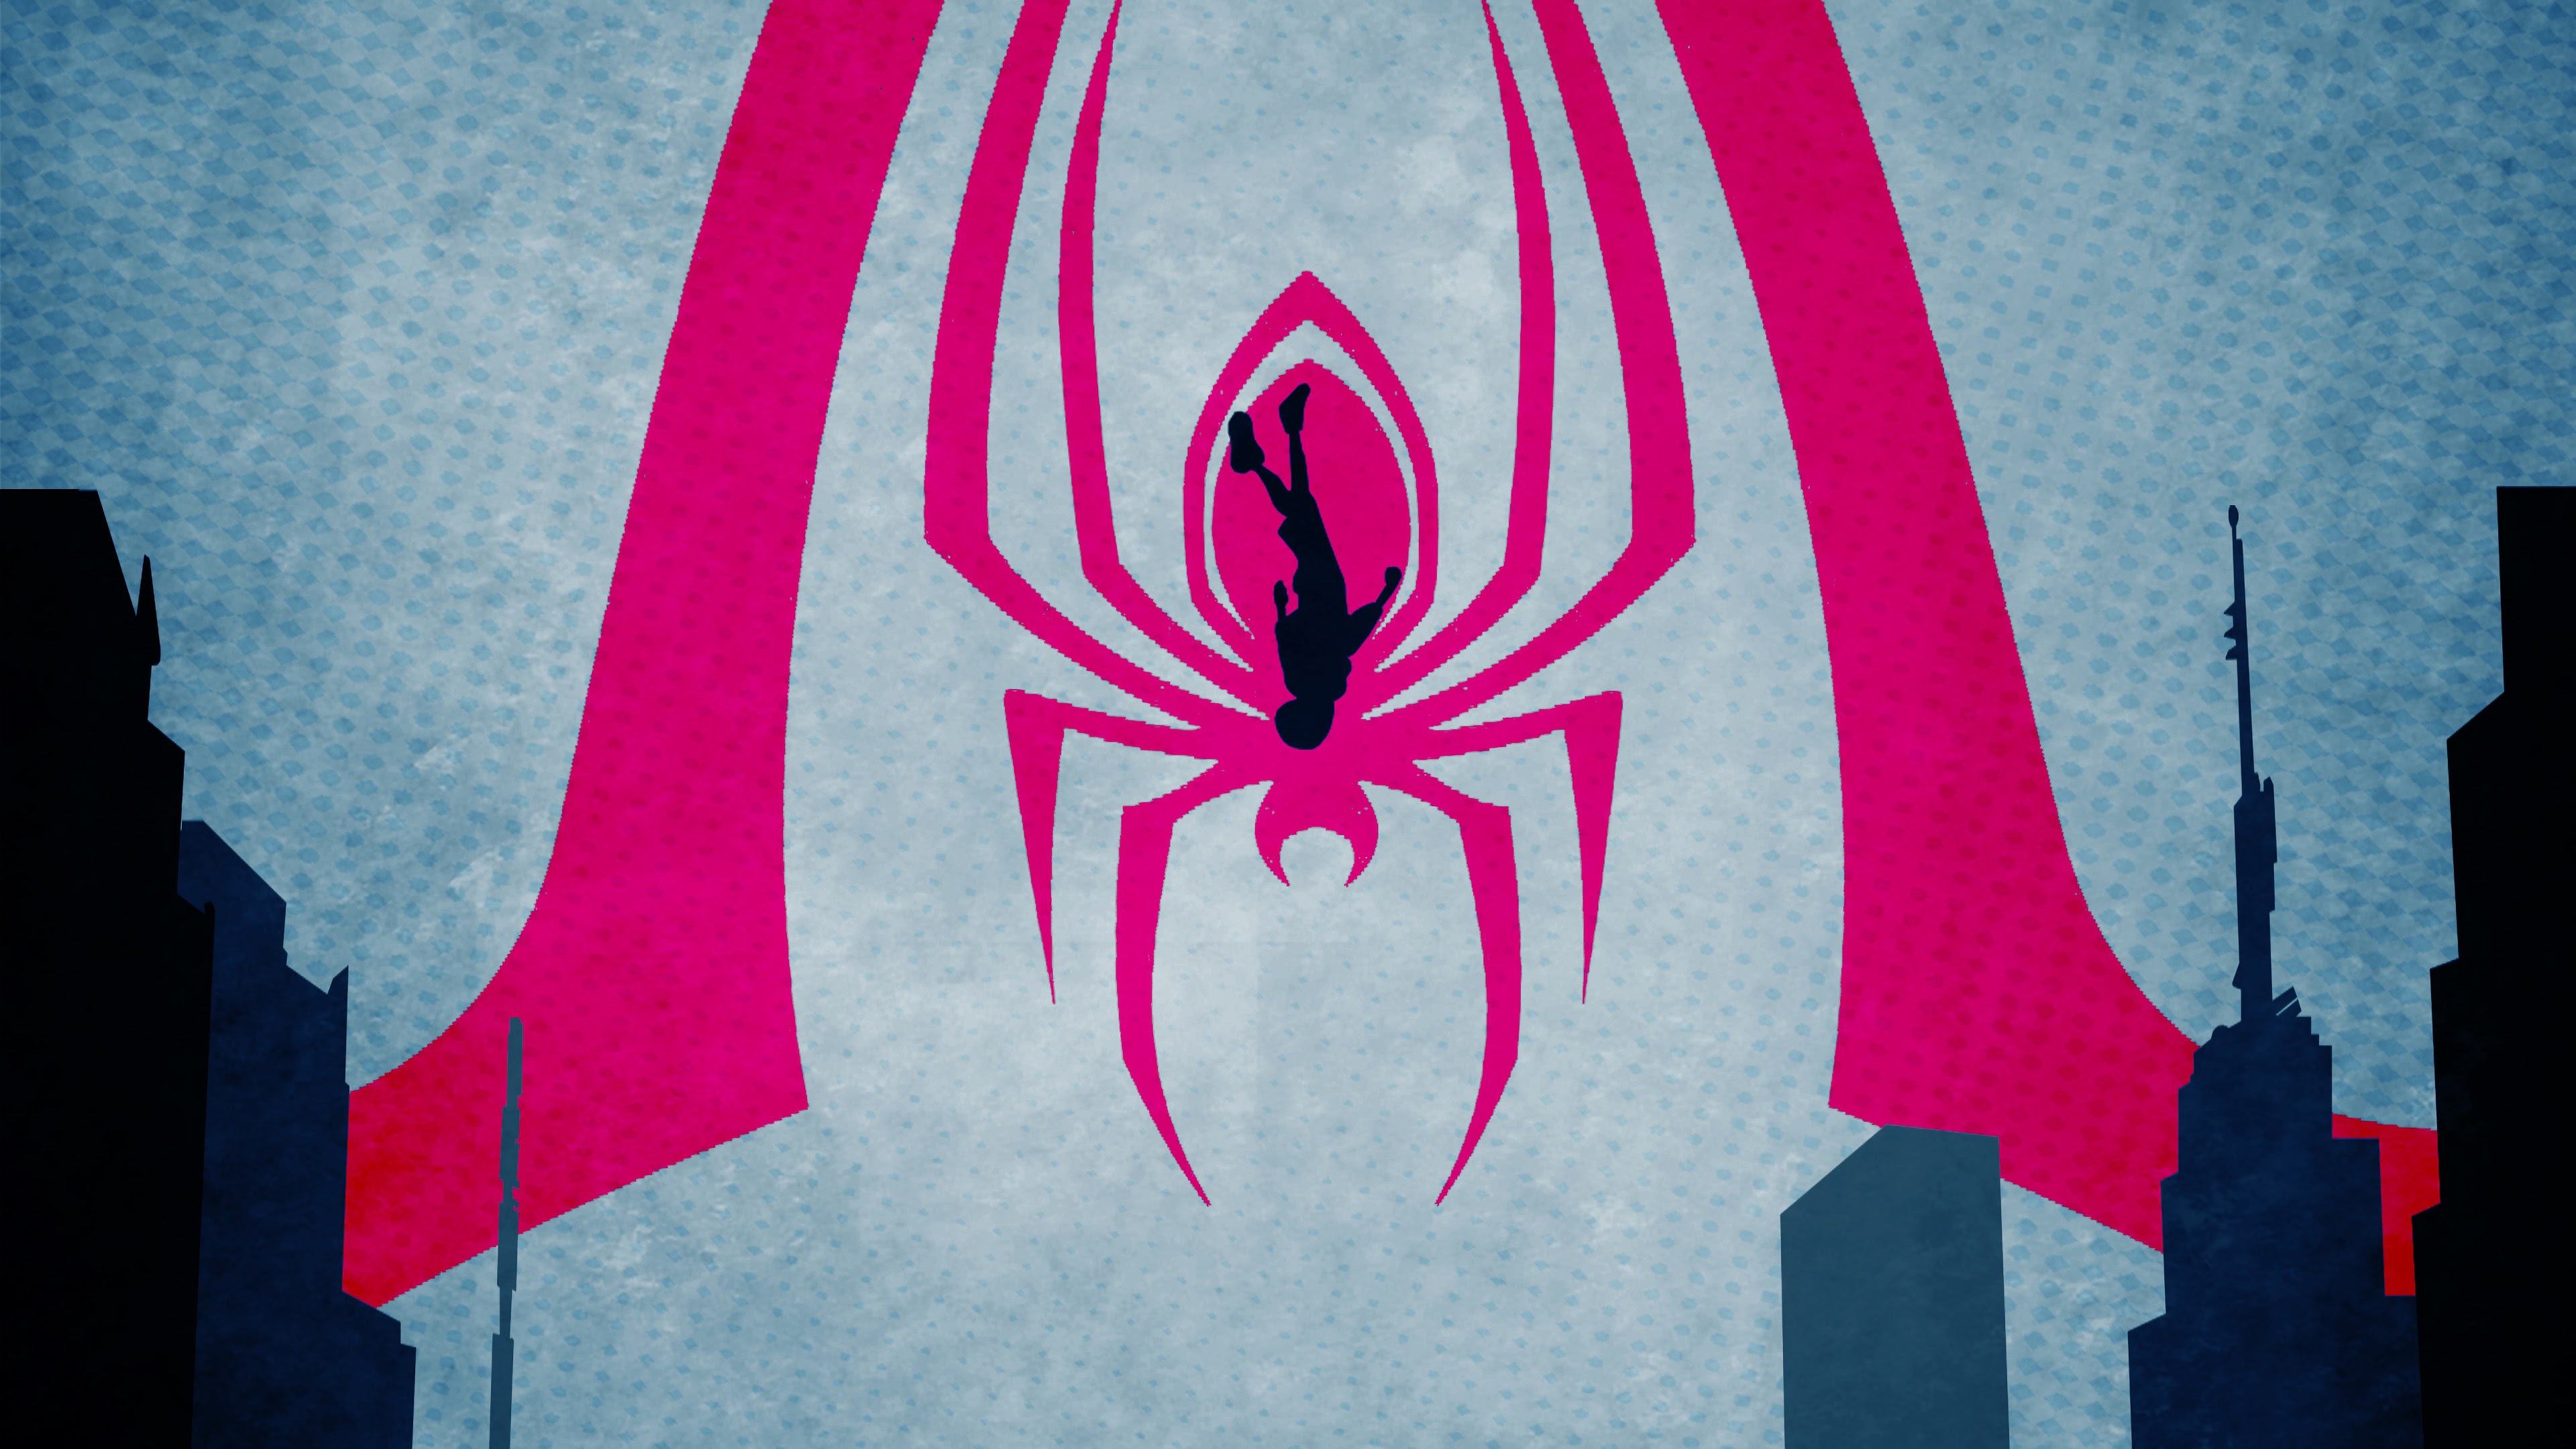 Spider Man Minimal Wallpapers